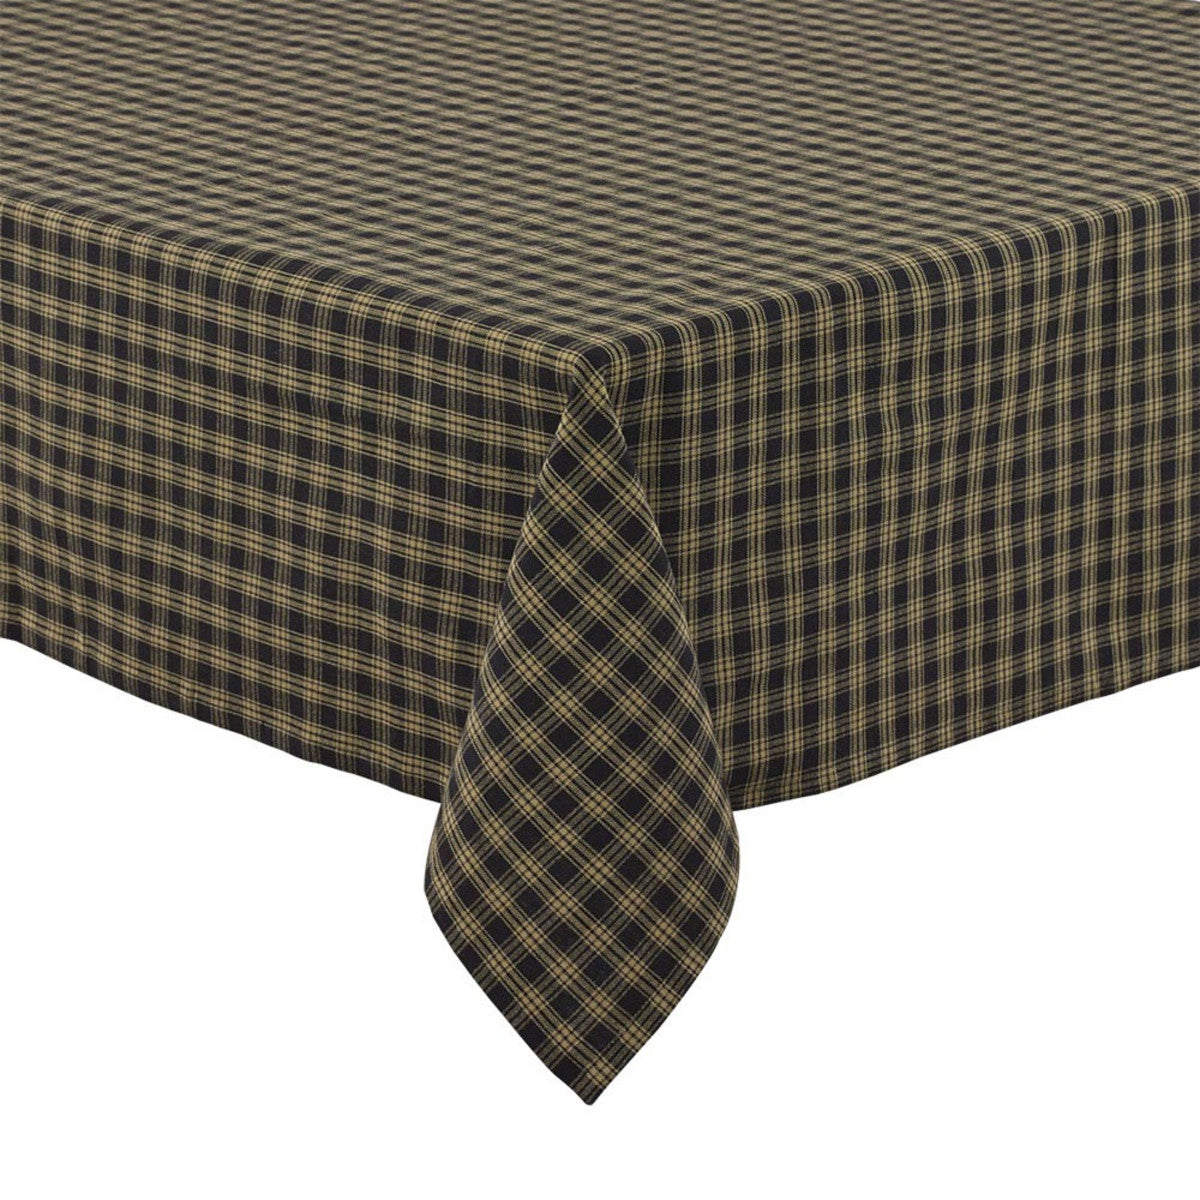 Sturbridge Tablecloth - 84" - Black